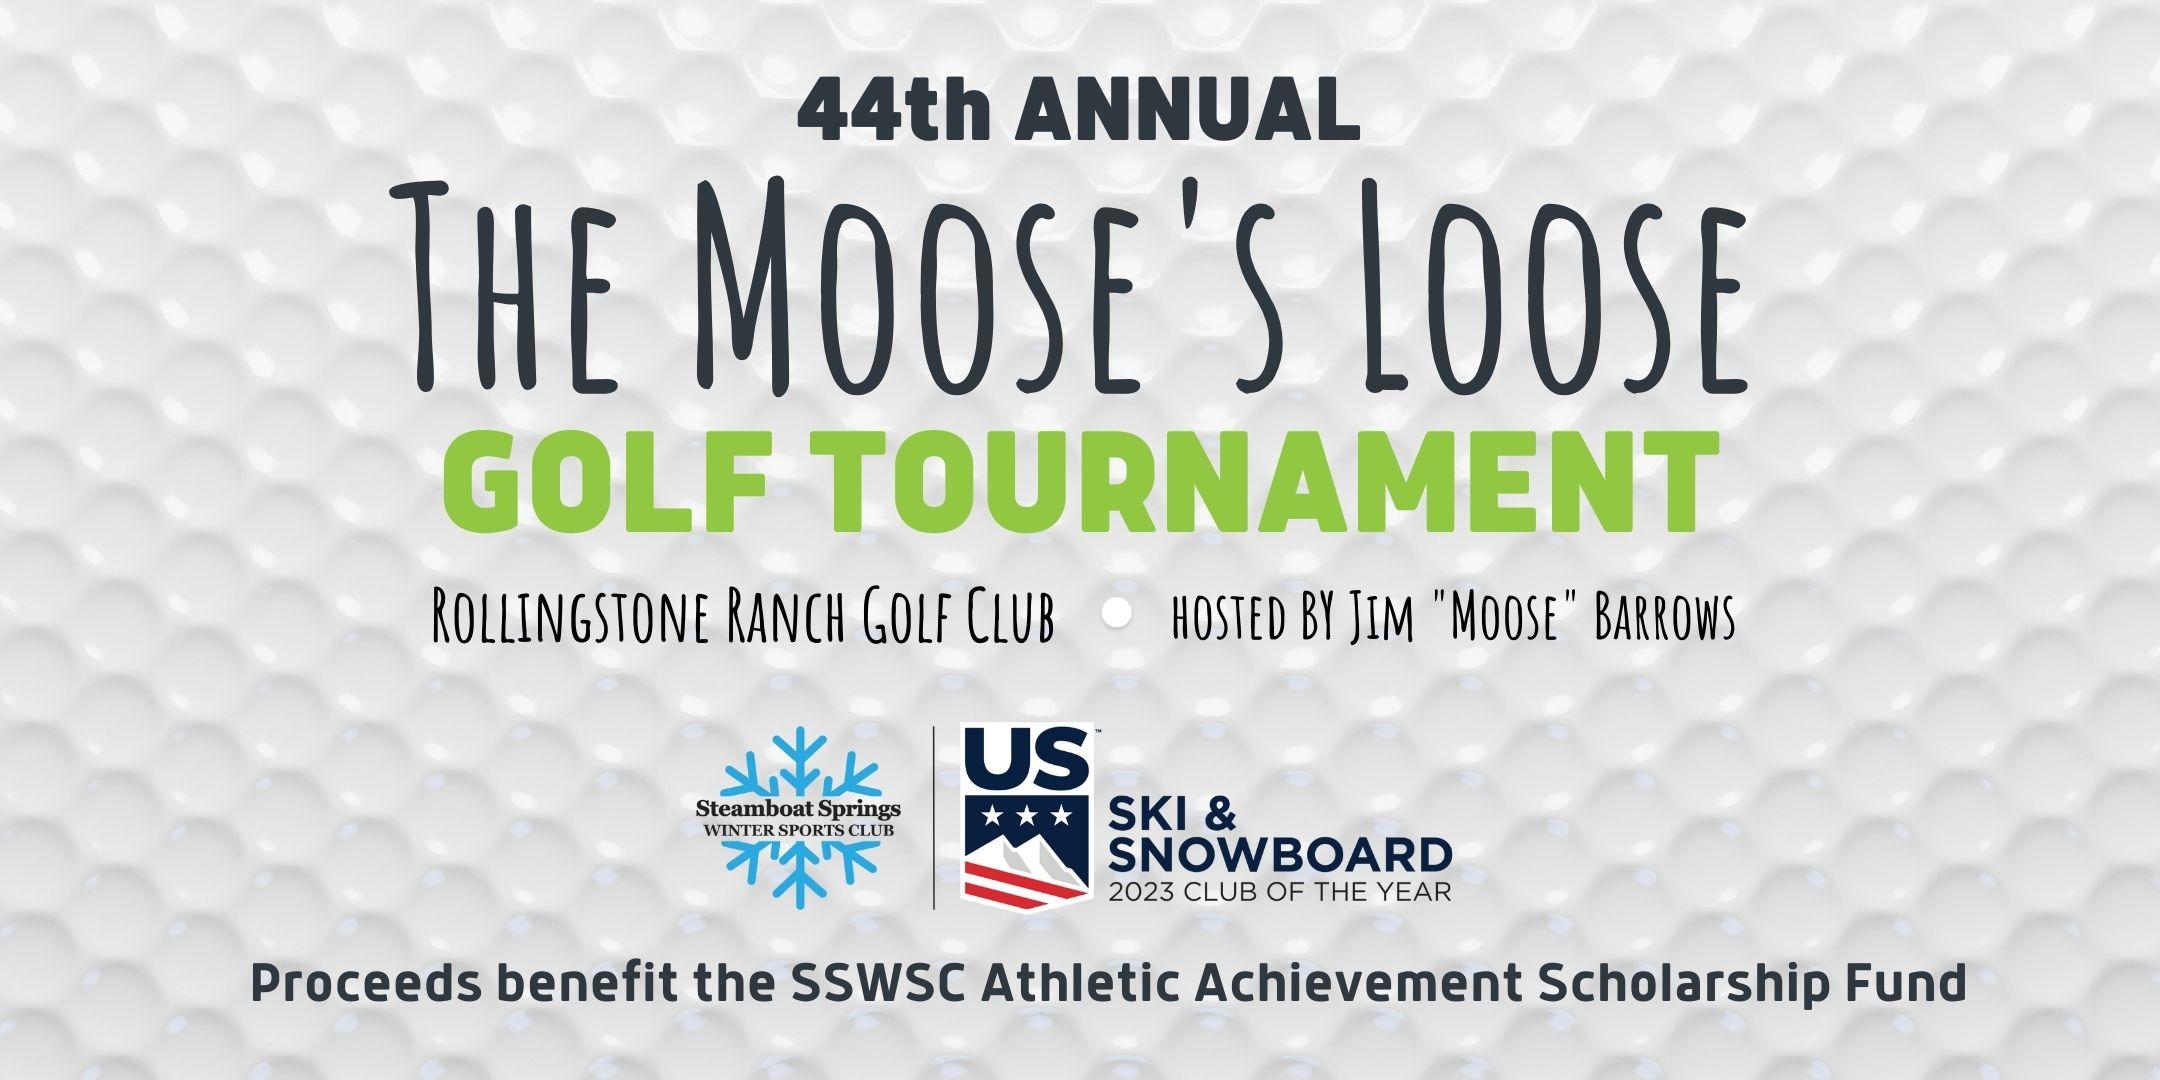 2023 Moose's Loose Golf Tournament